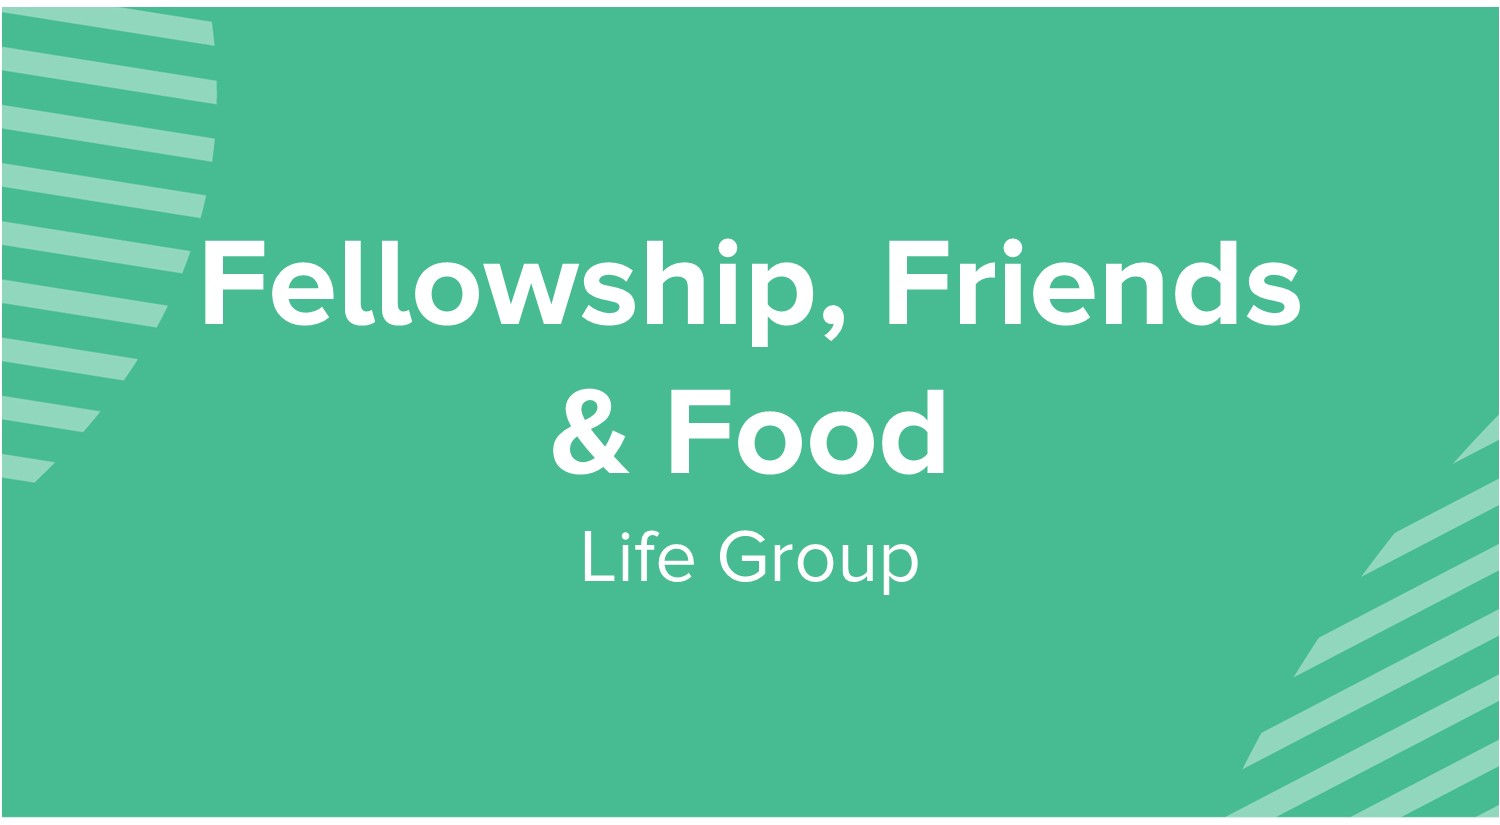 Fellowship, Friends & Food Life Group